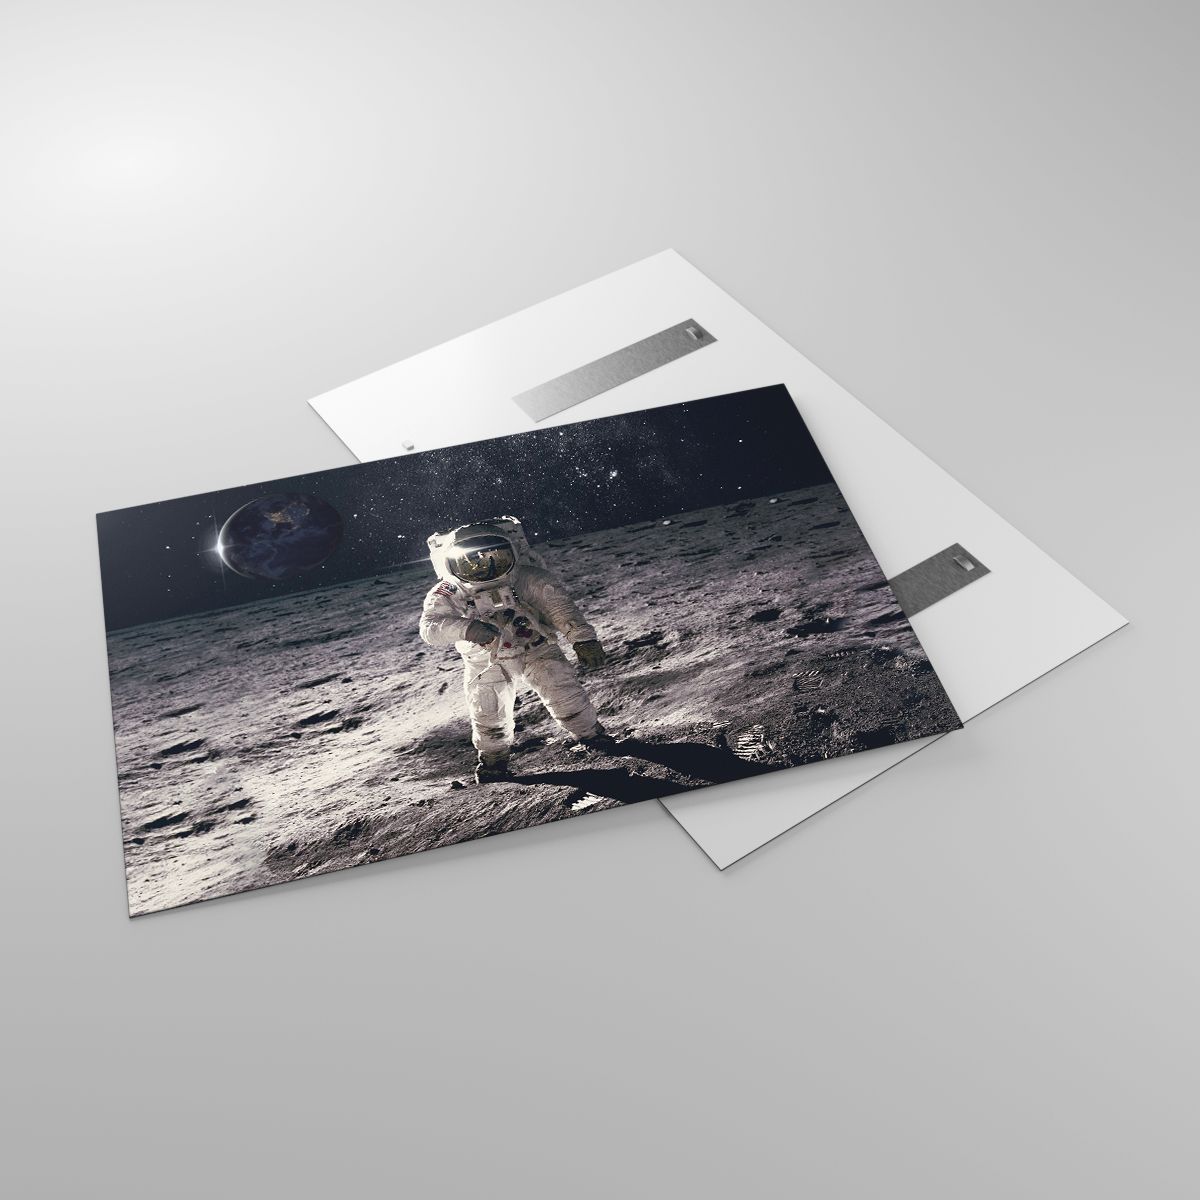 Bild på glas Abstraktion, Bild på glas Man På Månen, Bild på glas Astronaut, Bild på glas Kosmos, Bild på glas Måne